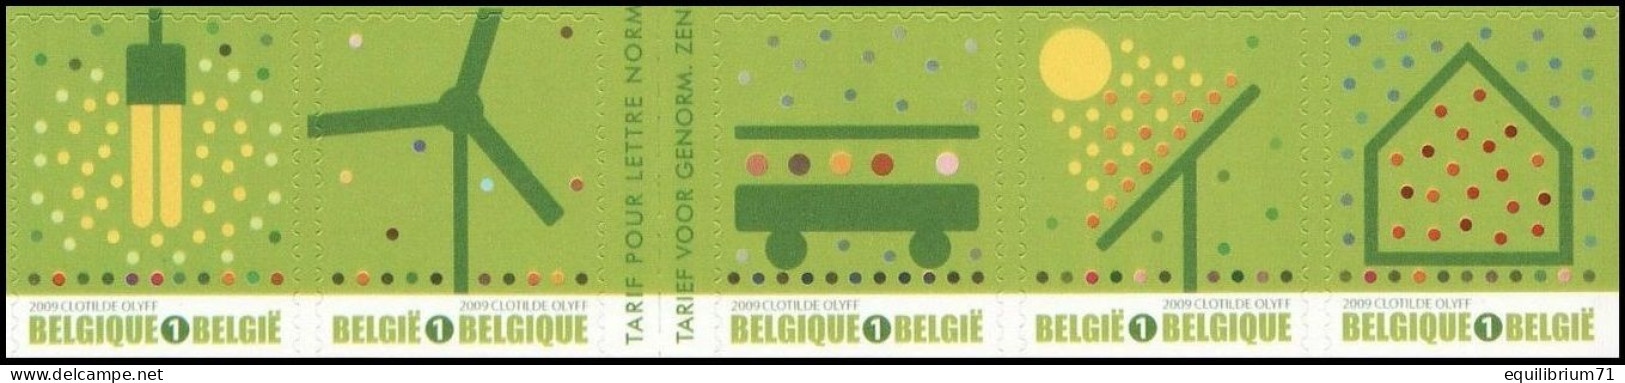 B104/C104**(3911-14 + 3915a) - Timbres Verts/Groene Zegels/Grüne Briefmarken - 1/2 Carnet/1/2 Boekje - BELGIQUE / BELGIË - Nuovi